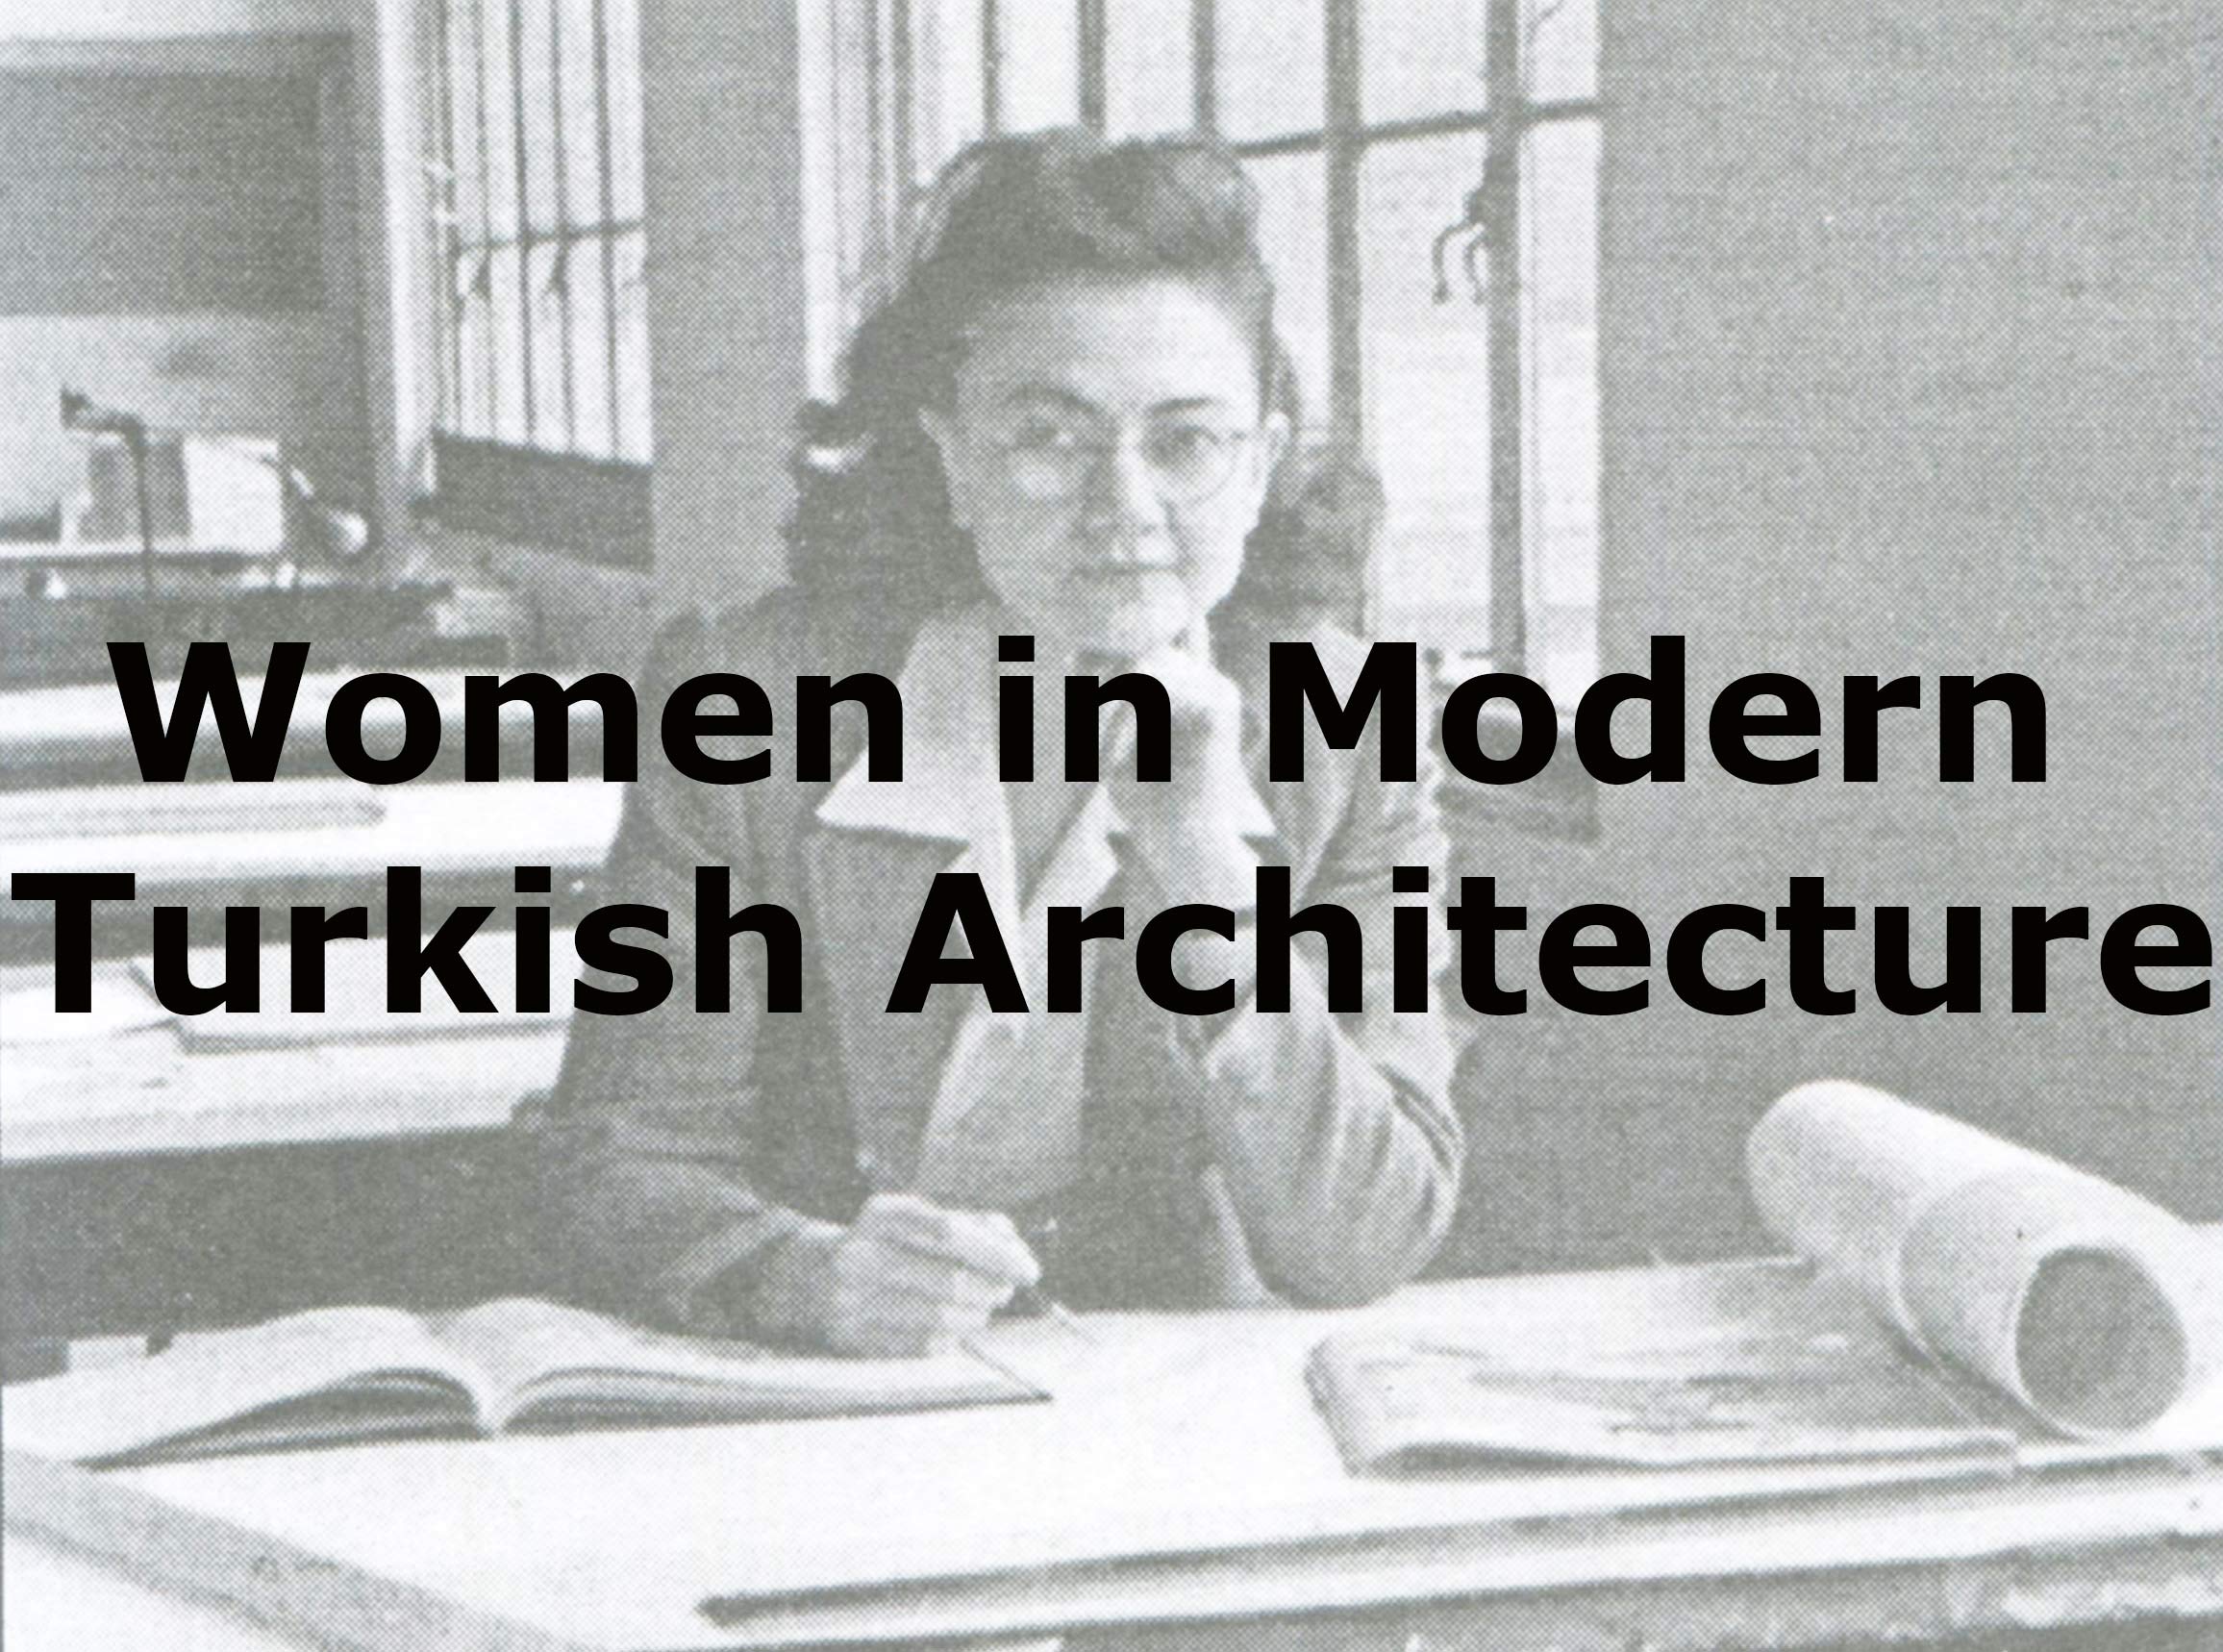 Women in Modern Territories of Turkish Architecture